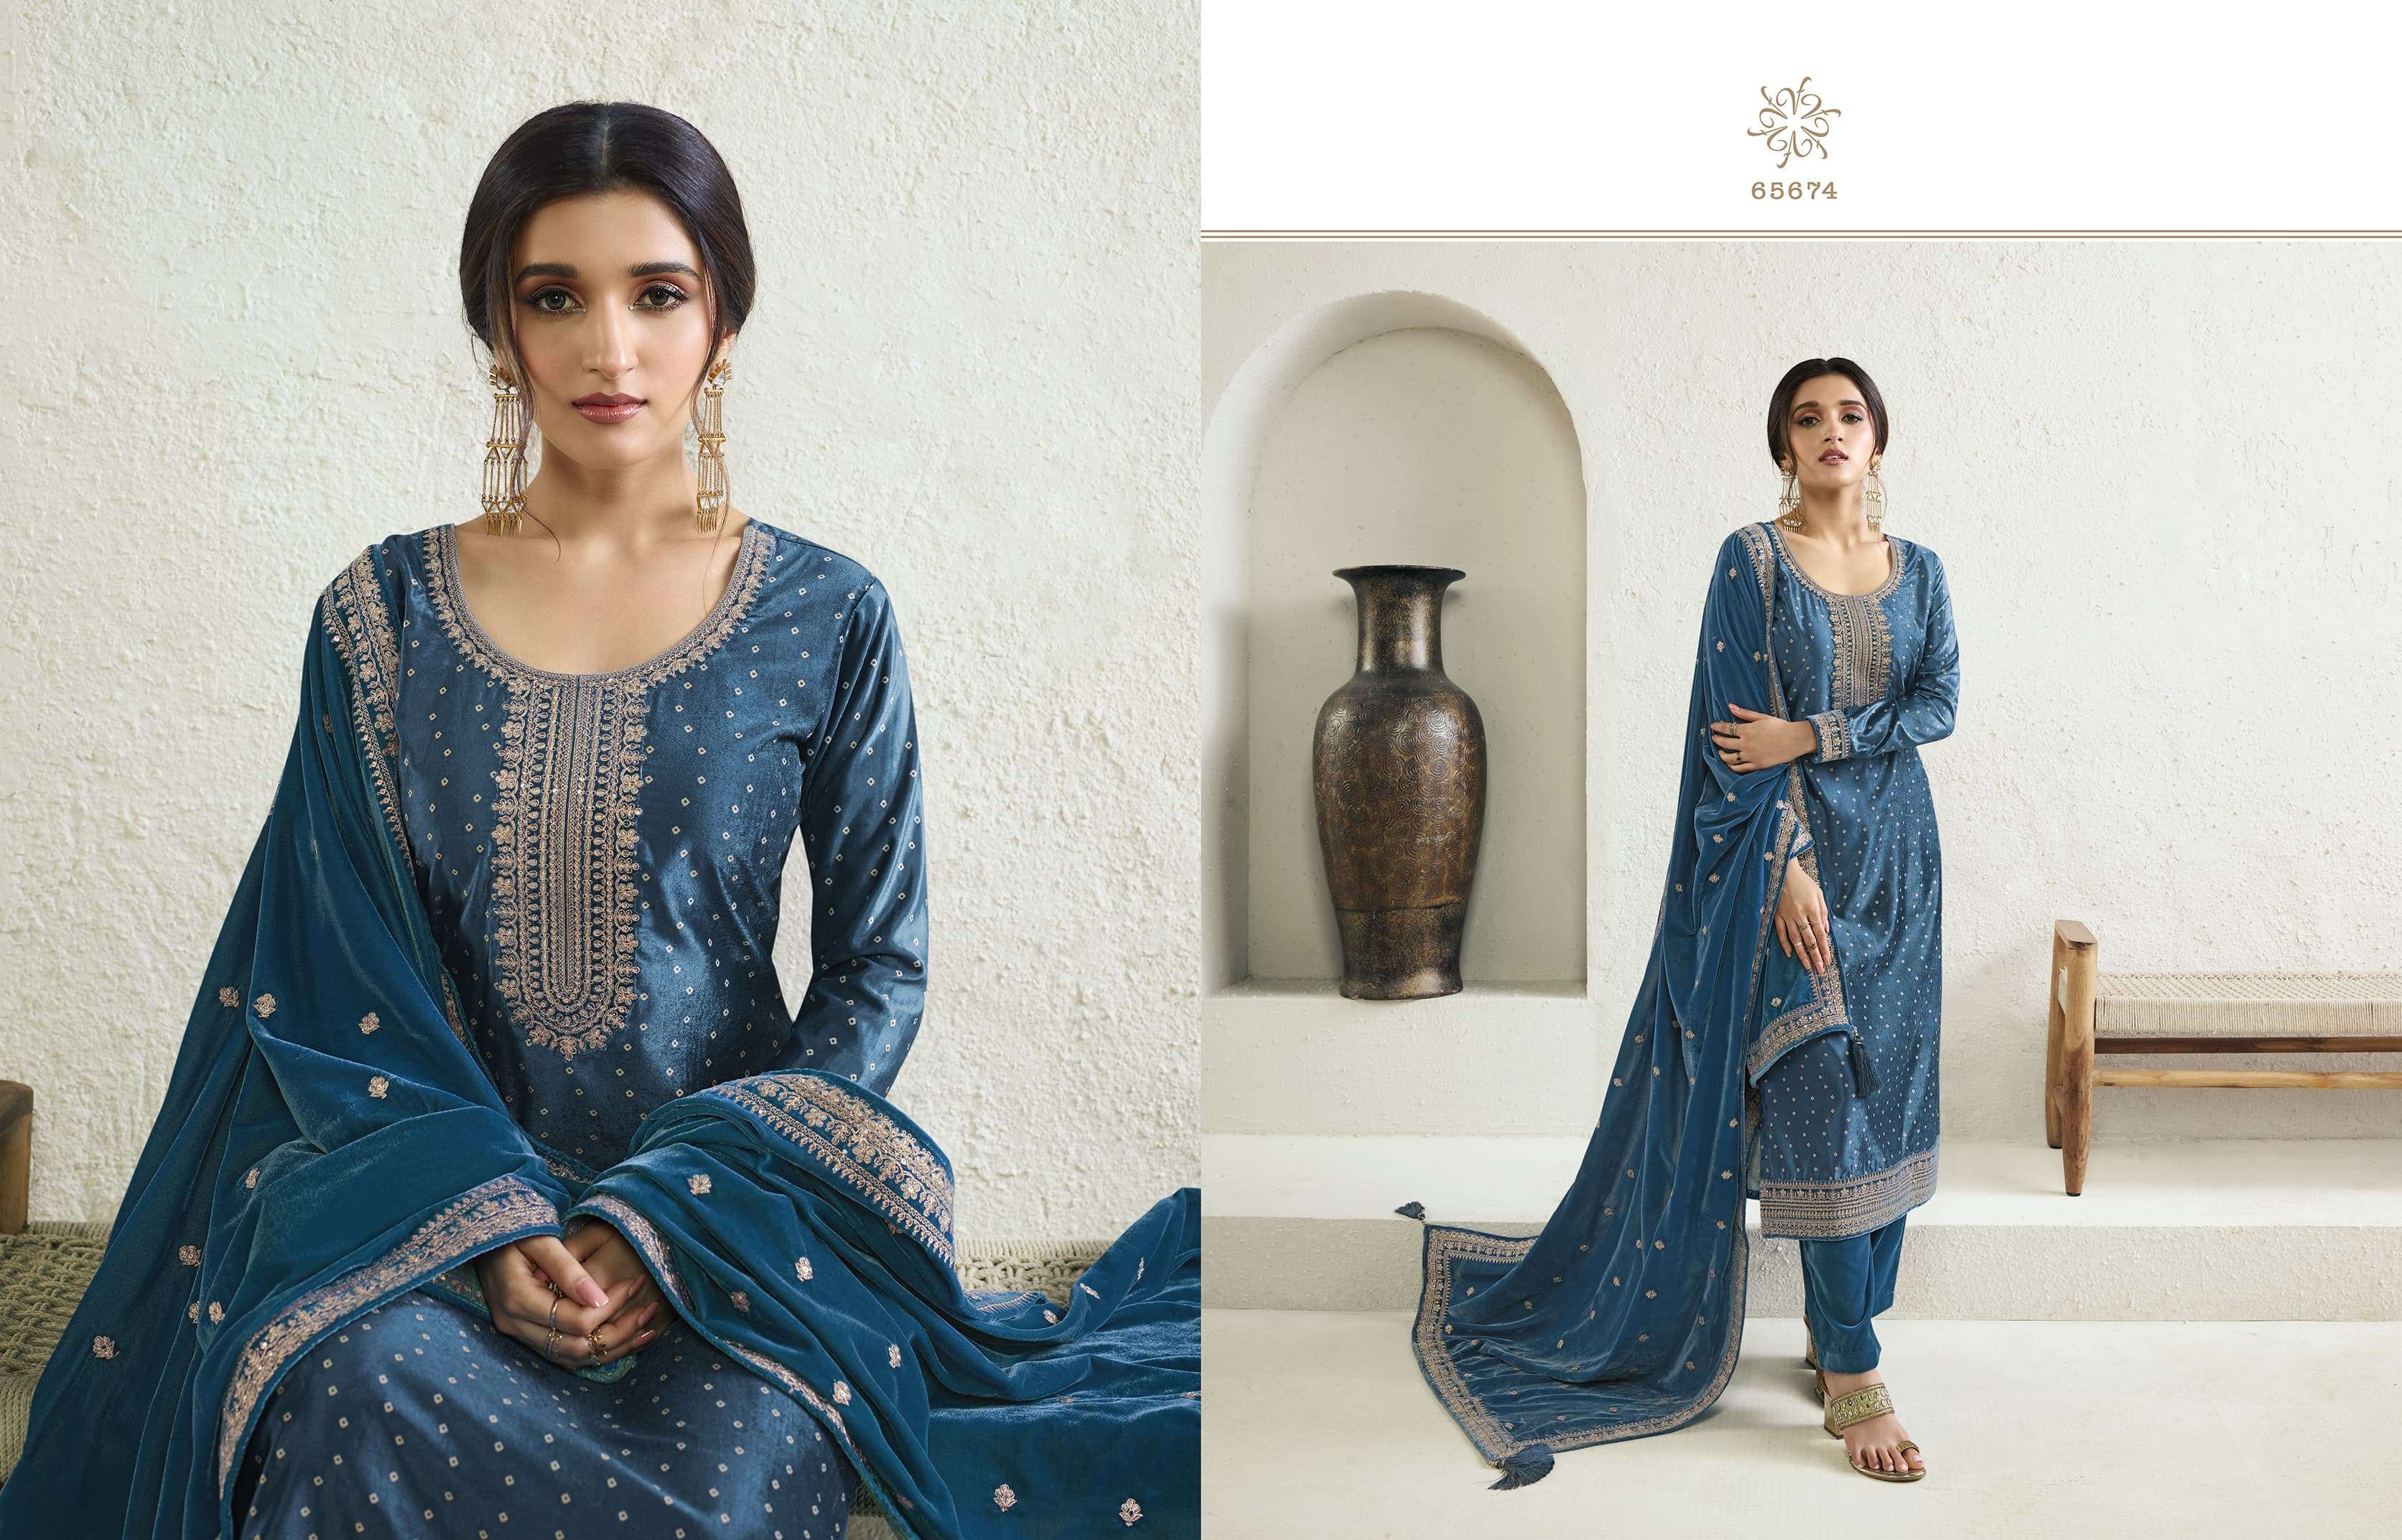 vinay fashion kervin kanval 65671-65676 series latest fancy salwar kameez wholesaler surat gujarat